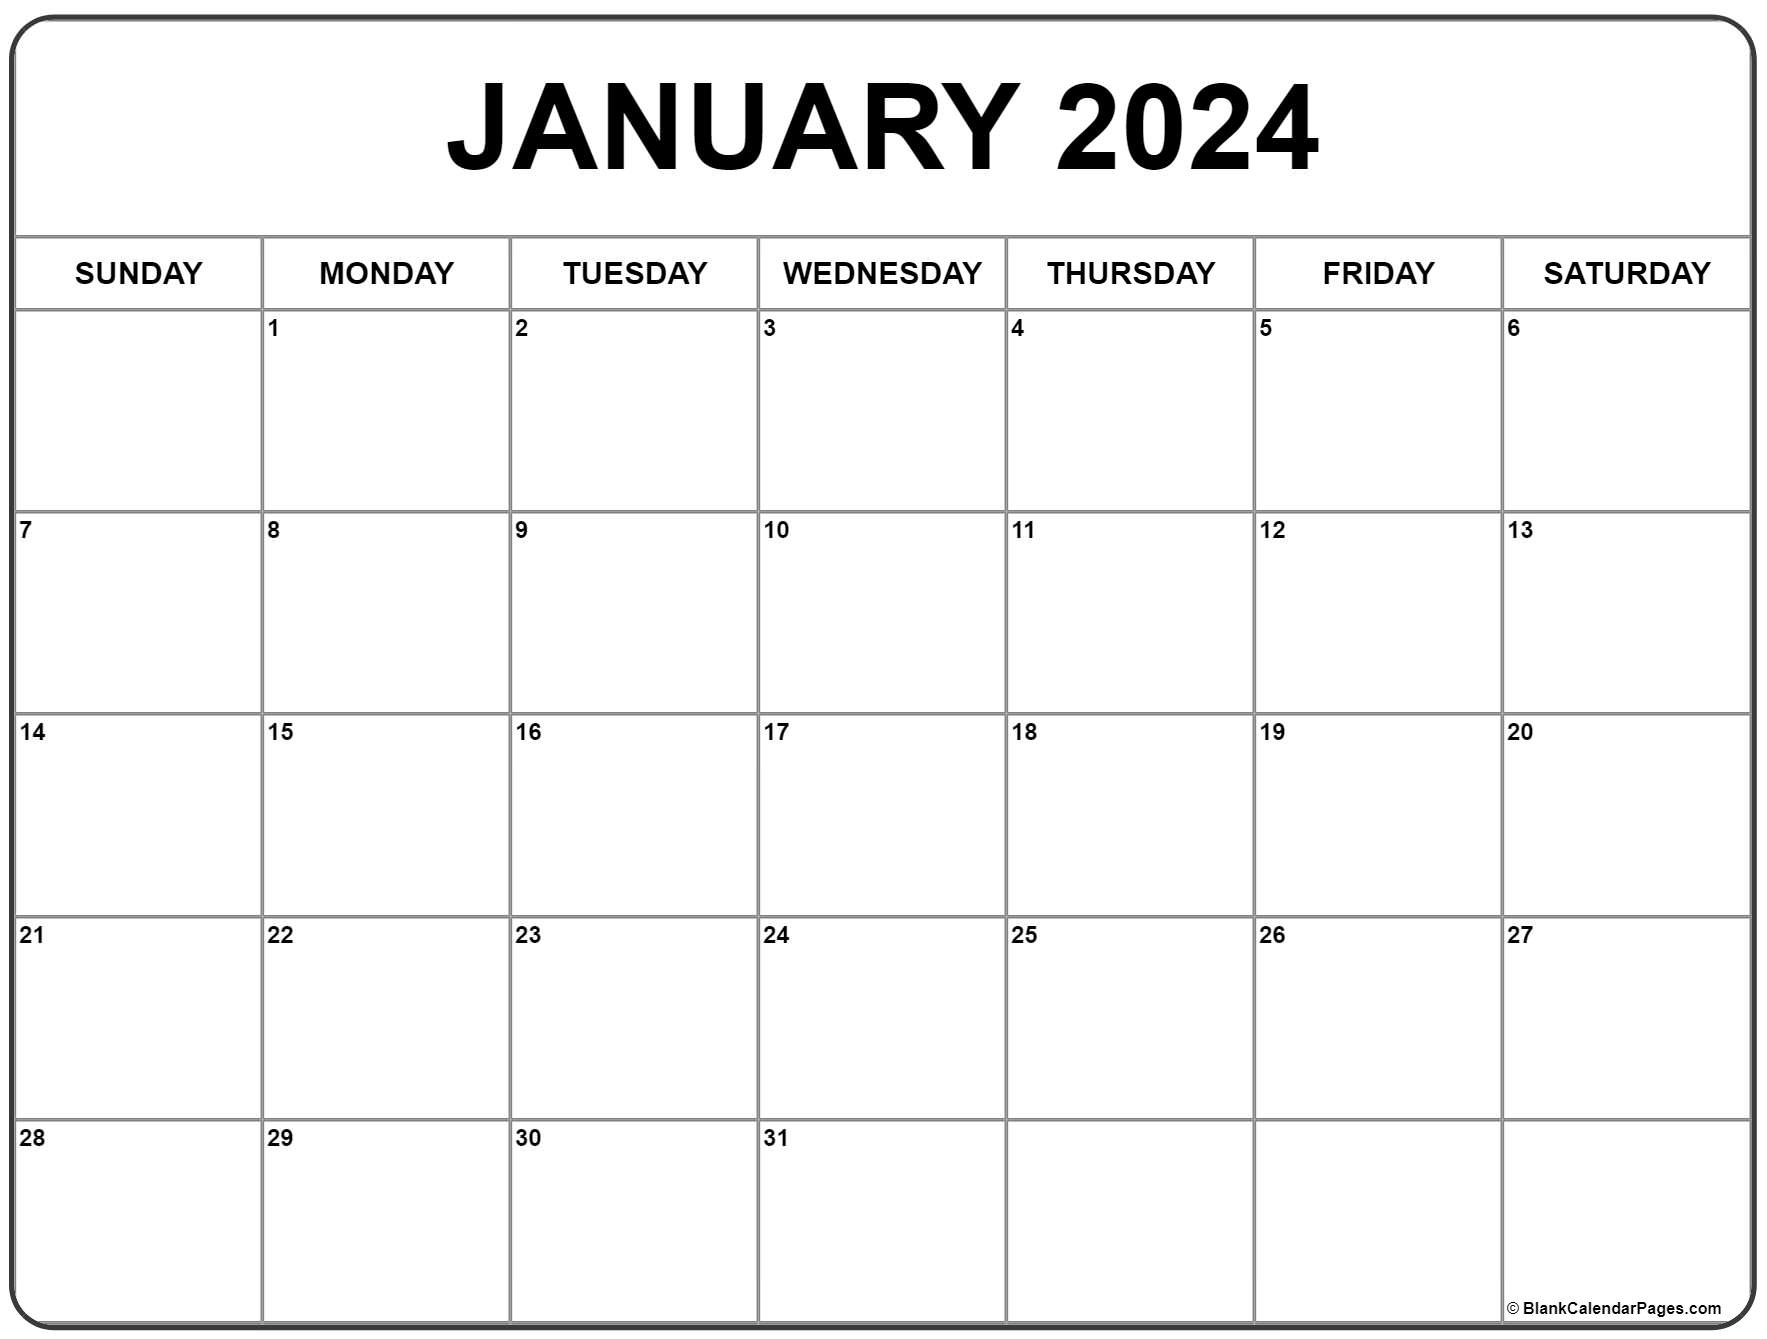 January 2024 Calendar | Free Printable Calendar for 2024 Free Printable Monthly Calendar